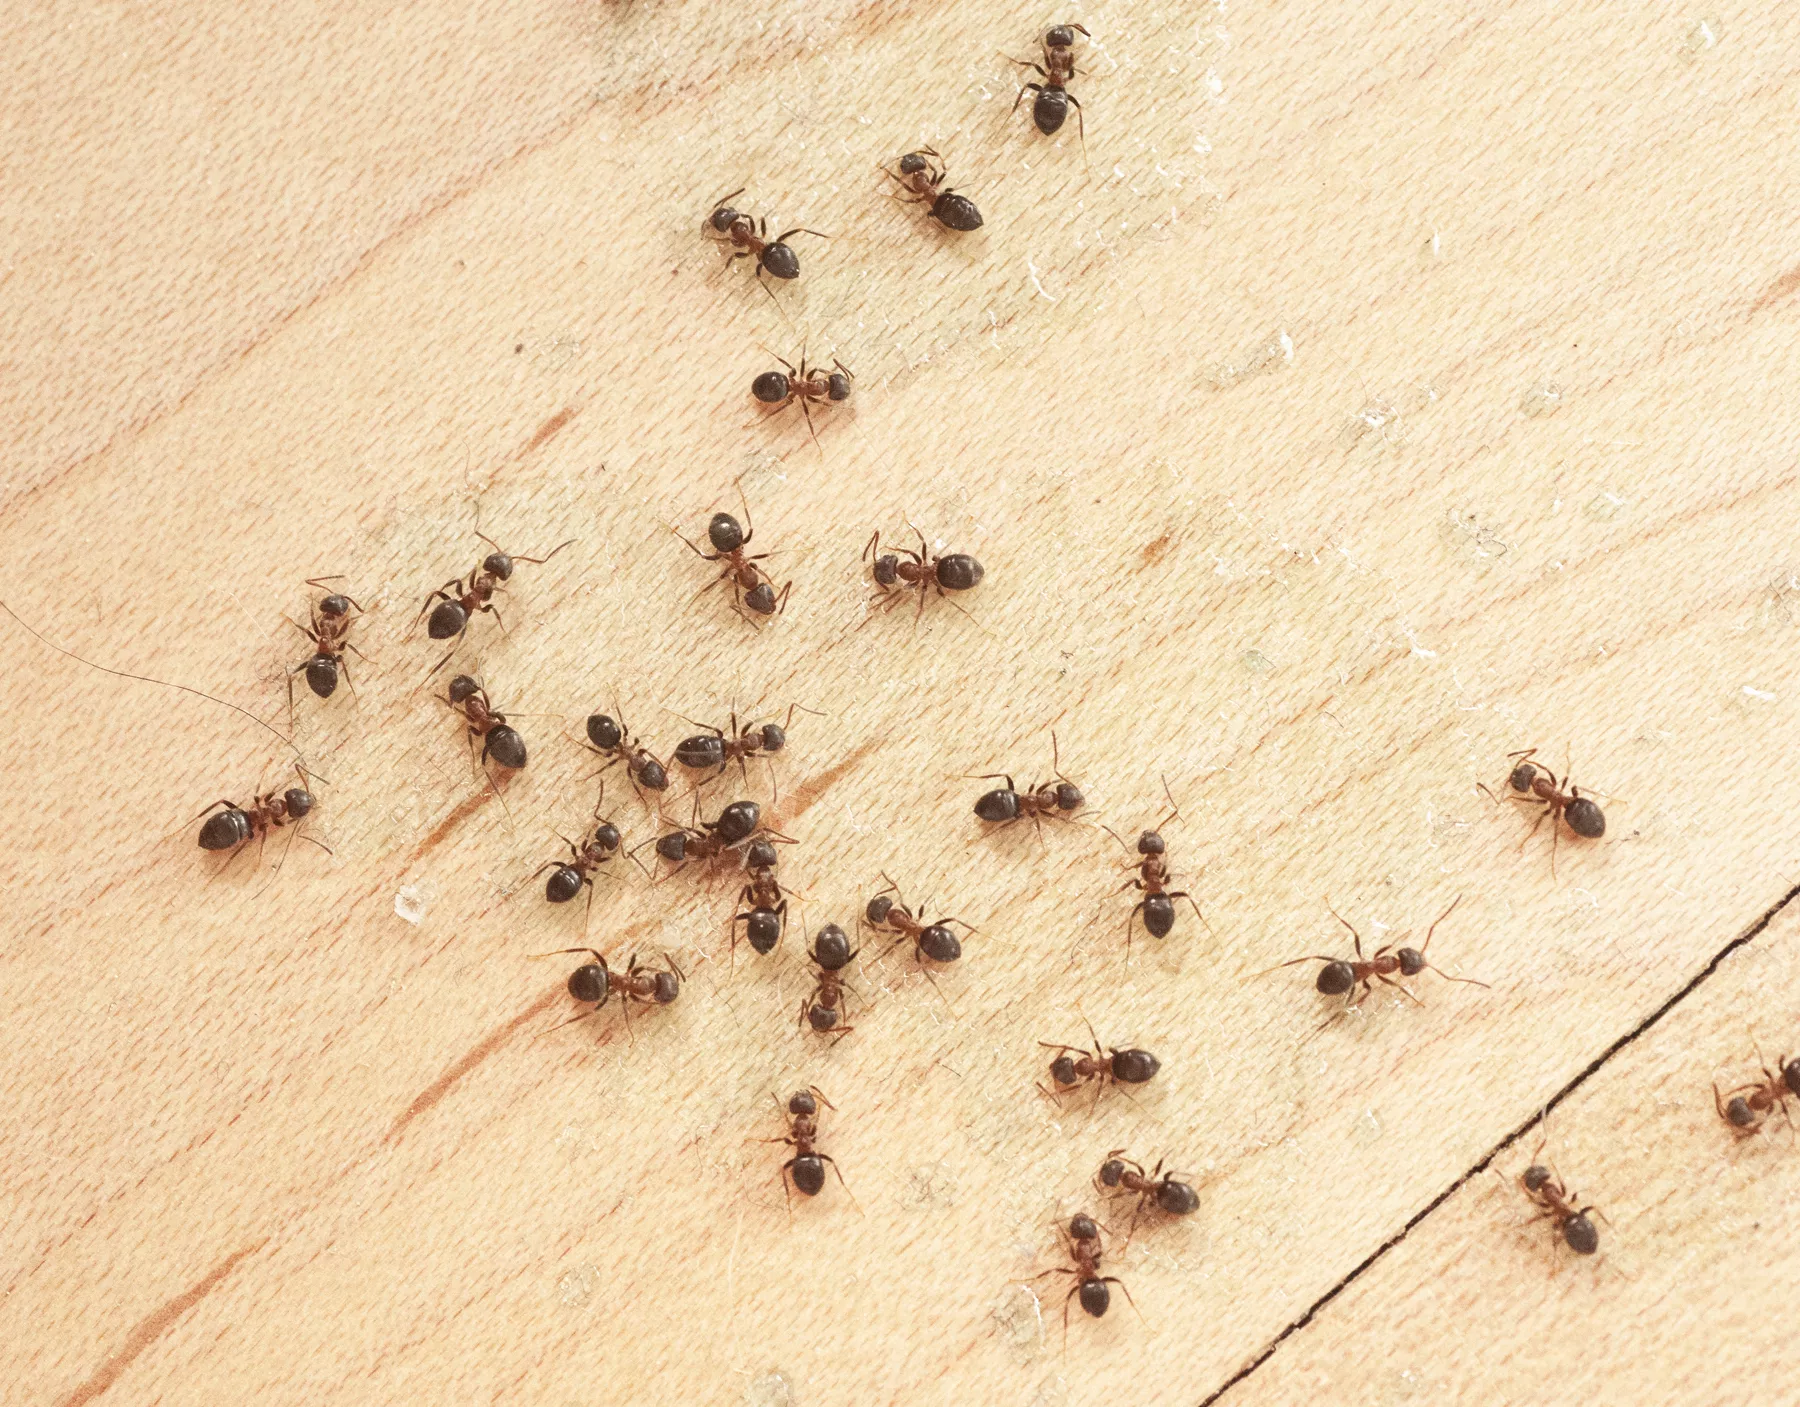 Tiny Ants In Florida